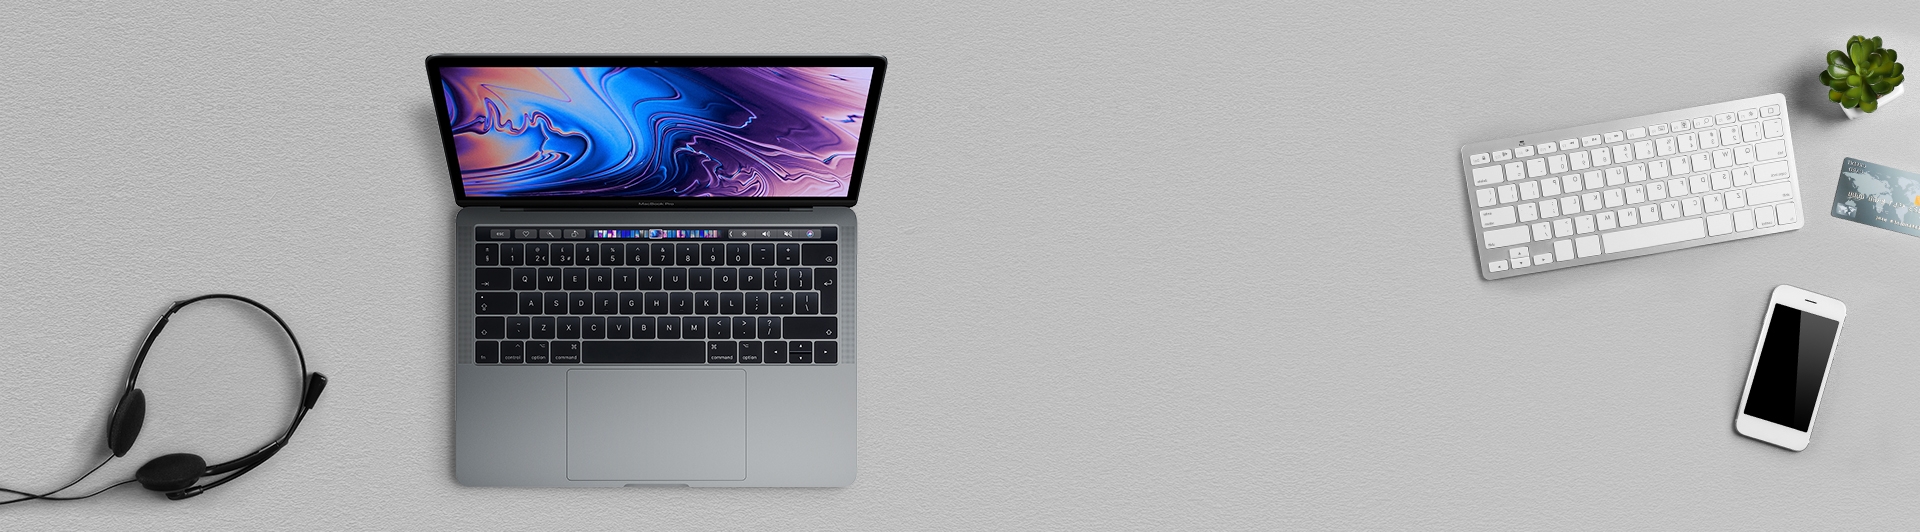 Macbook Pro i5 13.3 inch 2019 128GB Touch Bar Gray (MUHN2SA/A)